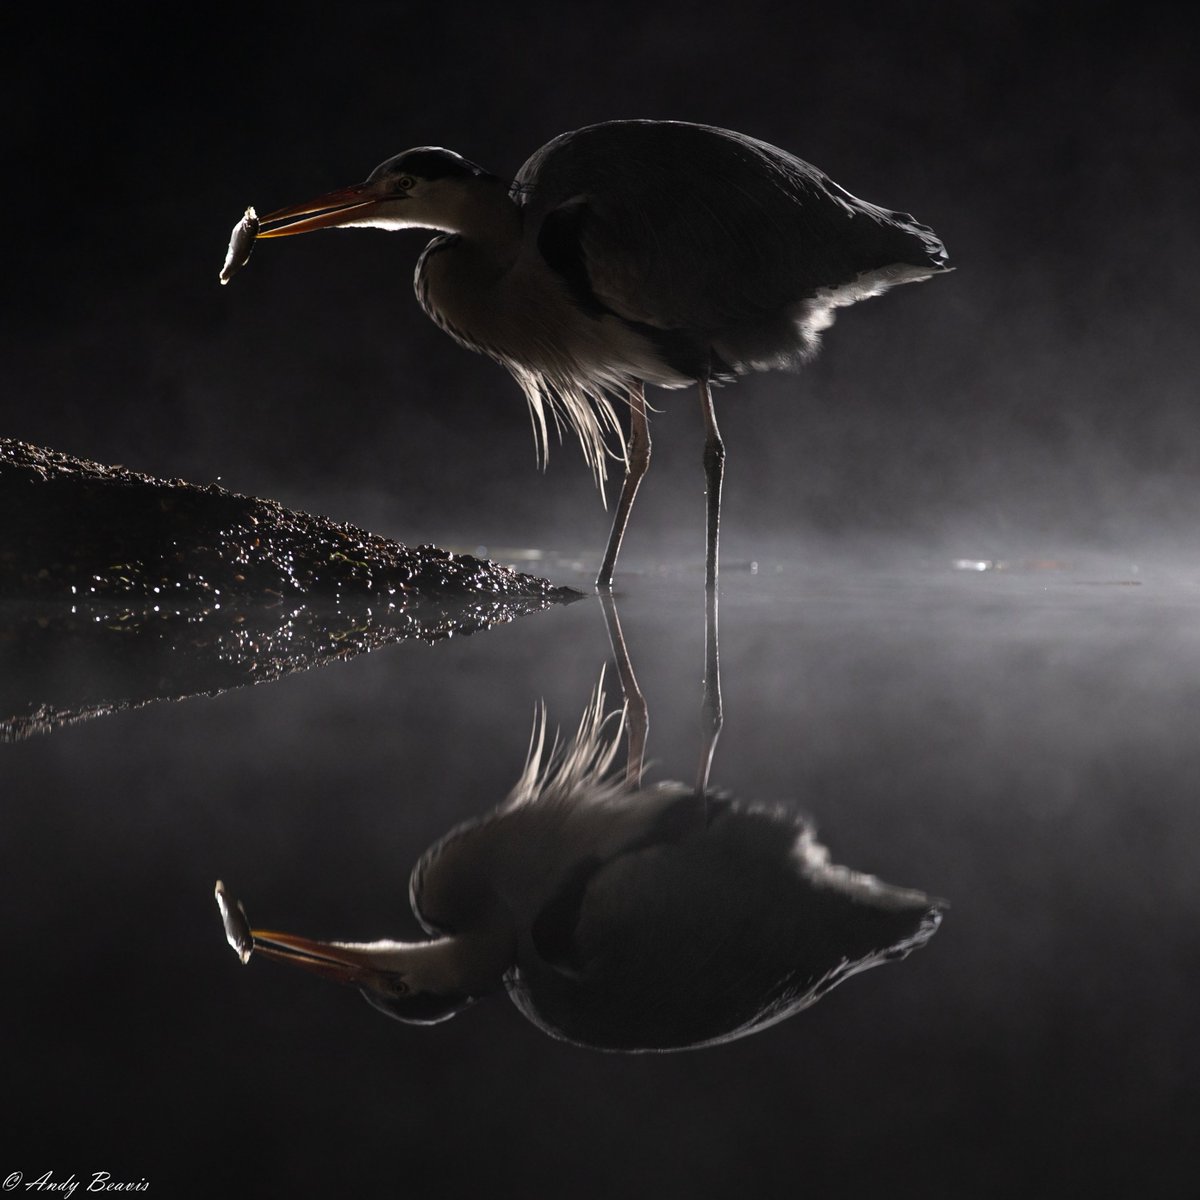 A final #Heron from the nocturnal hide shoot  #WildlifePhotographyHides at Bourne #wildlifephotos #flashphotography #UKwildlife